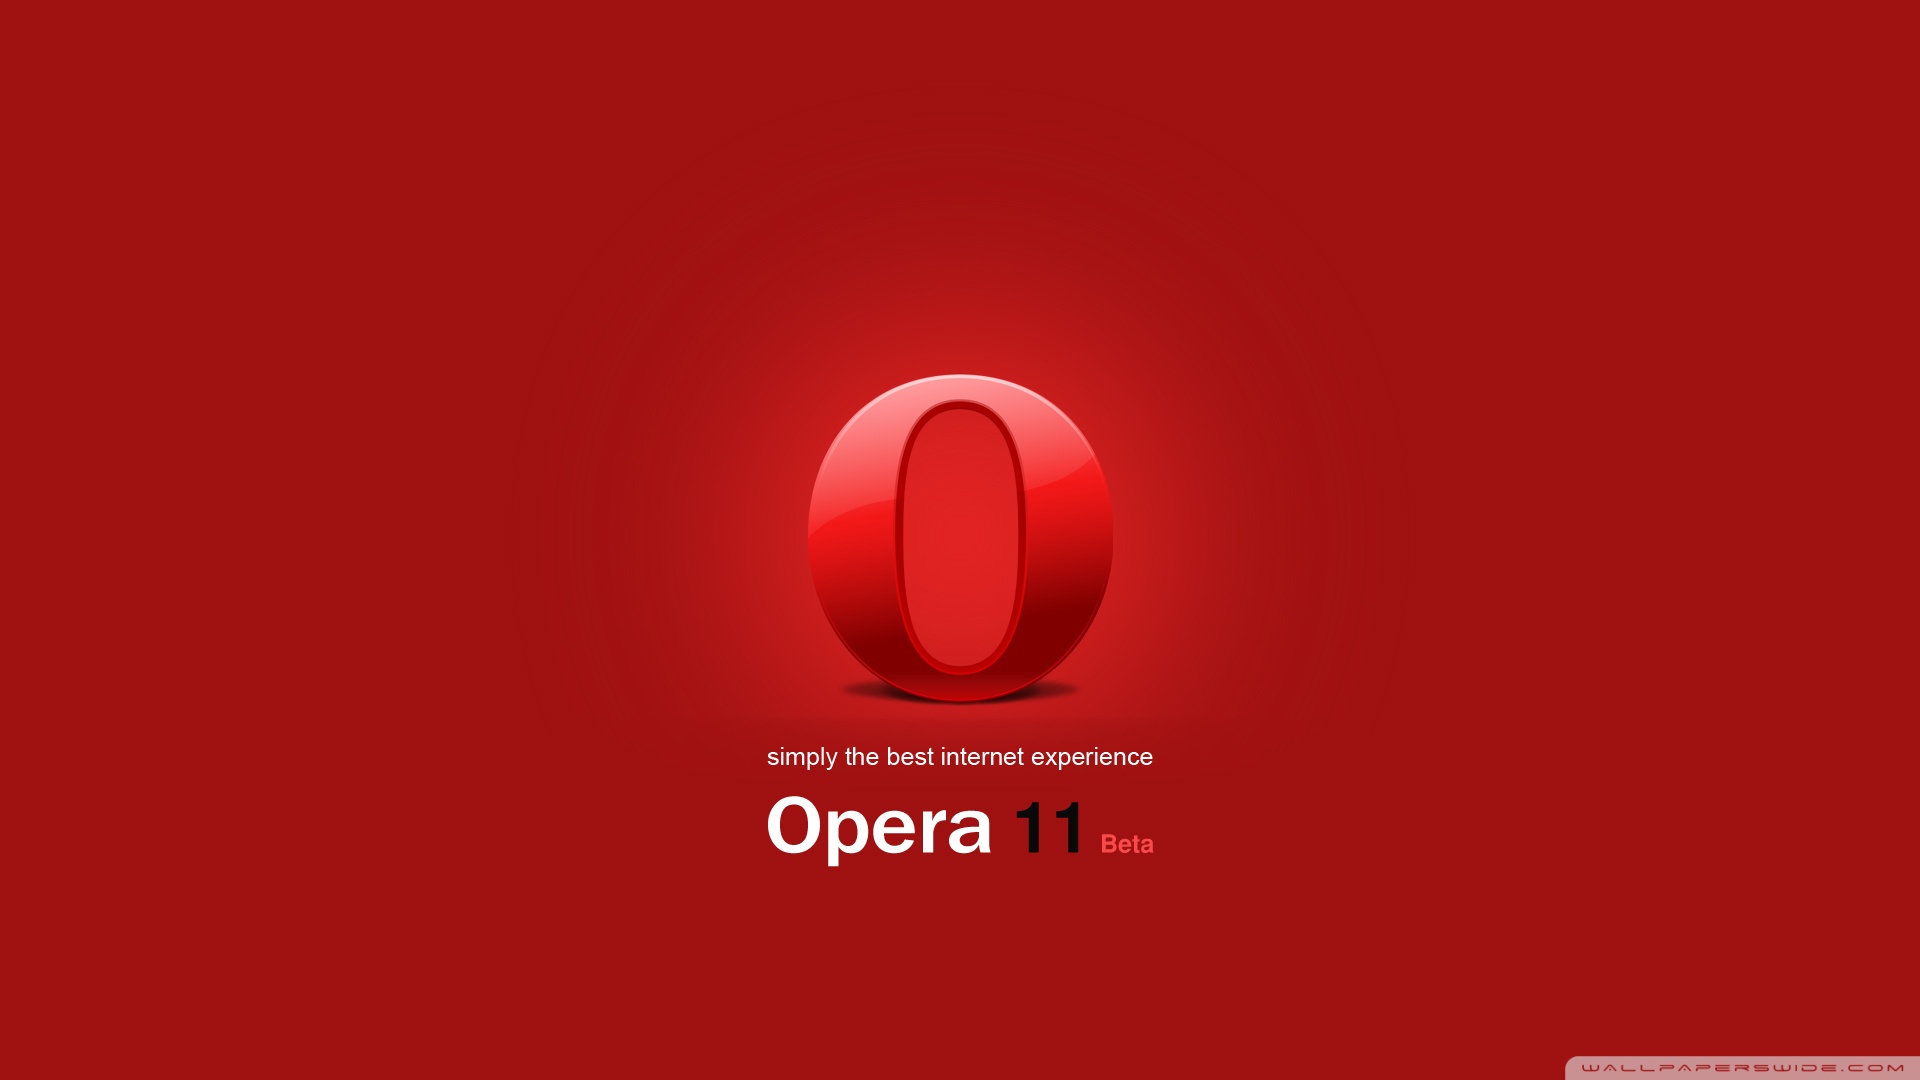 Opera 11 Beta Ultra HD Desktop Background Wallpaper for 4K UHD TV, Widescreen & UltraWide Desktop & Laptop, Tablet